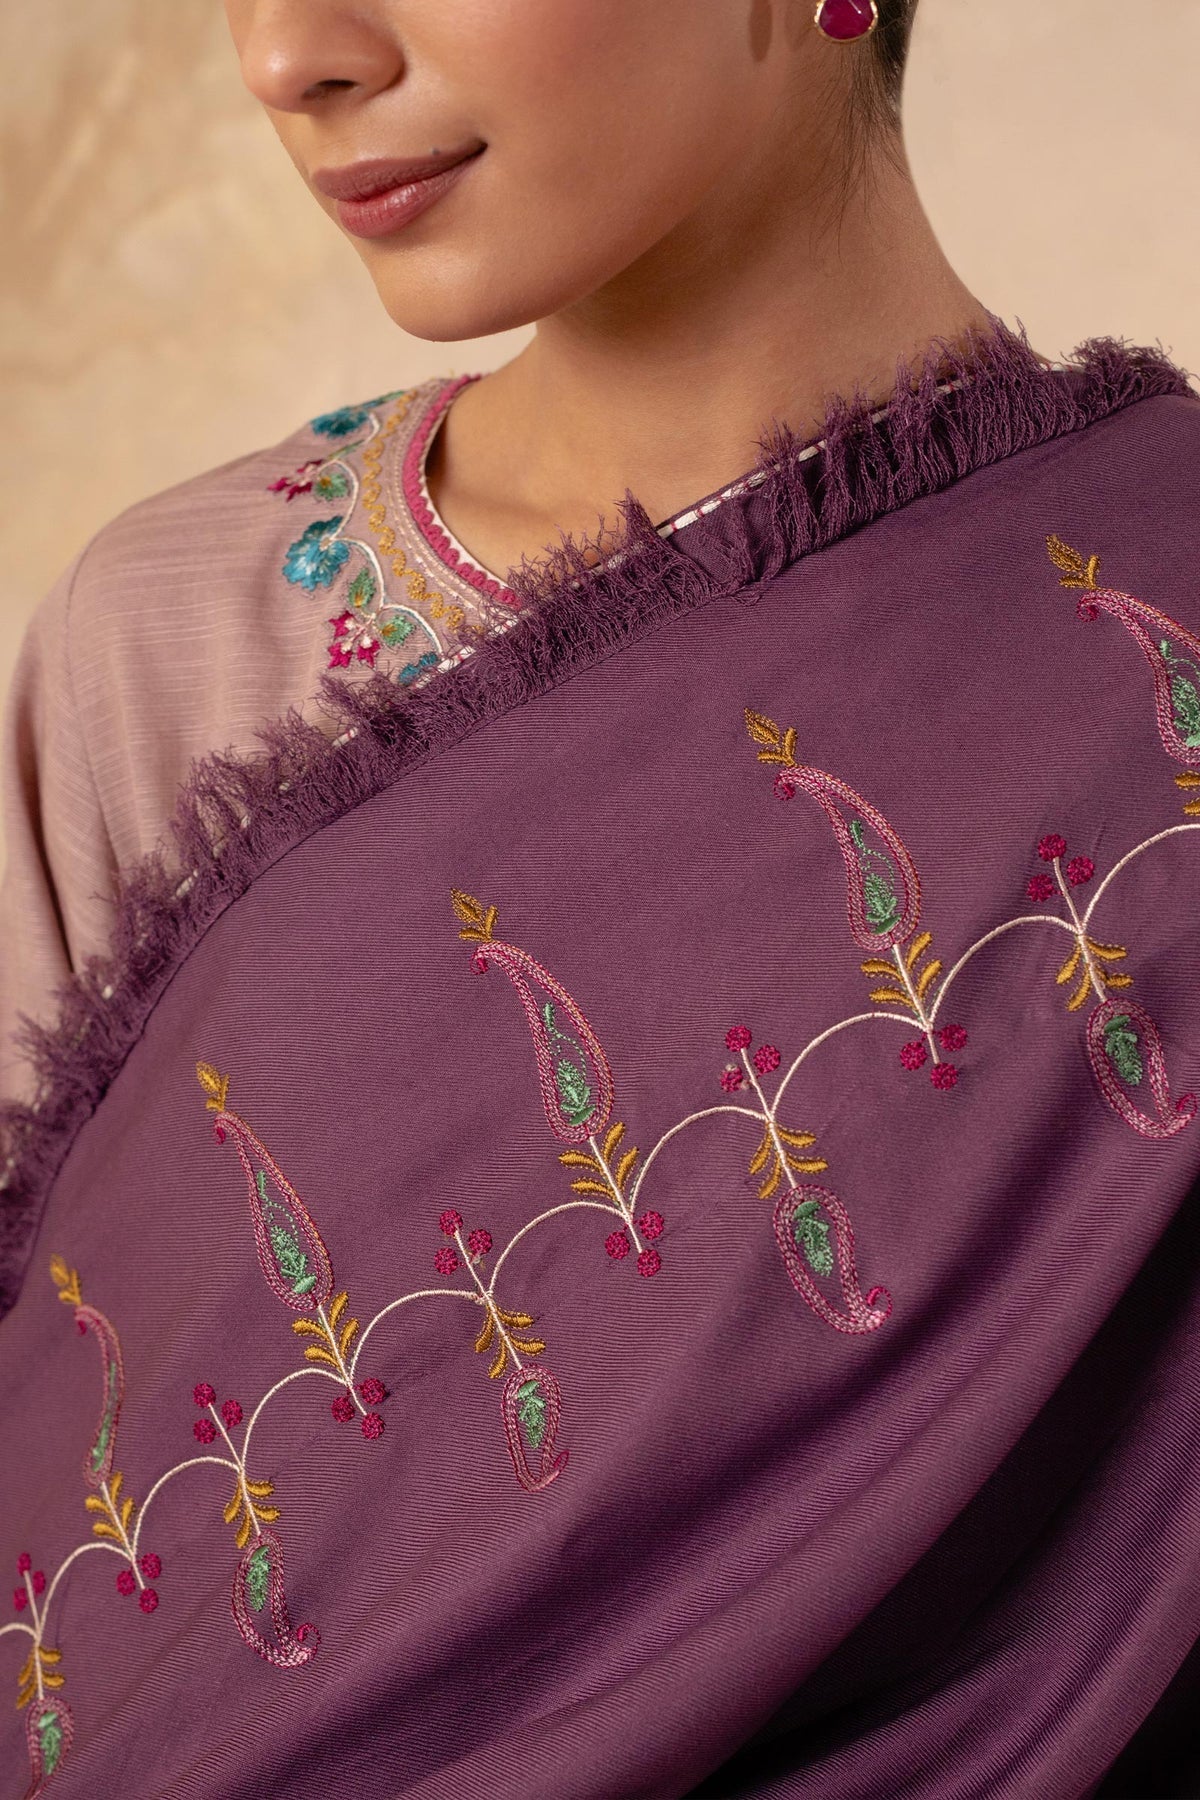 Buy Now, 1A - Coco Winter 2023 - Zara Shahjahan - Shahana Collection UK - Wedding and Bridal Party Wear - Fall Edit - Pakistani Designer Women-wear in UK 